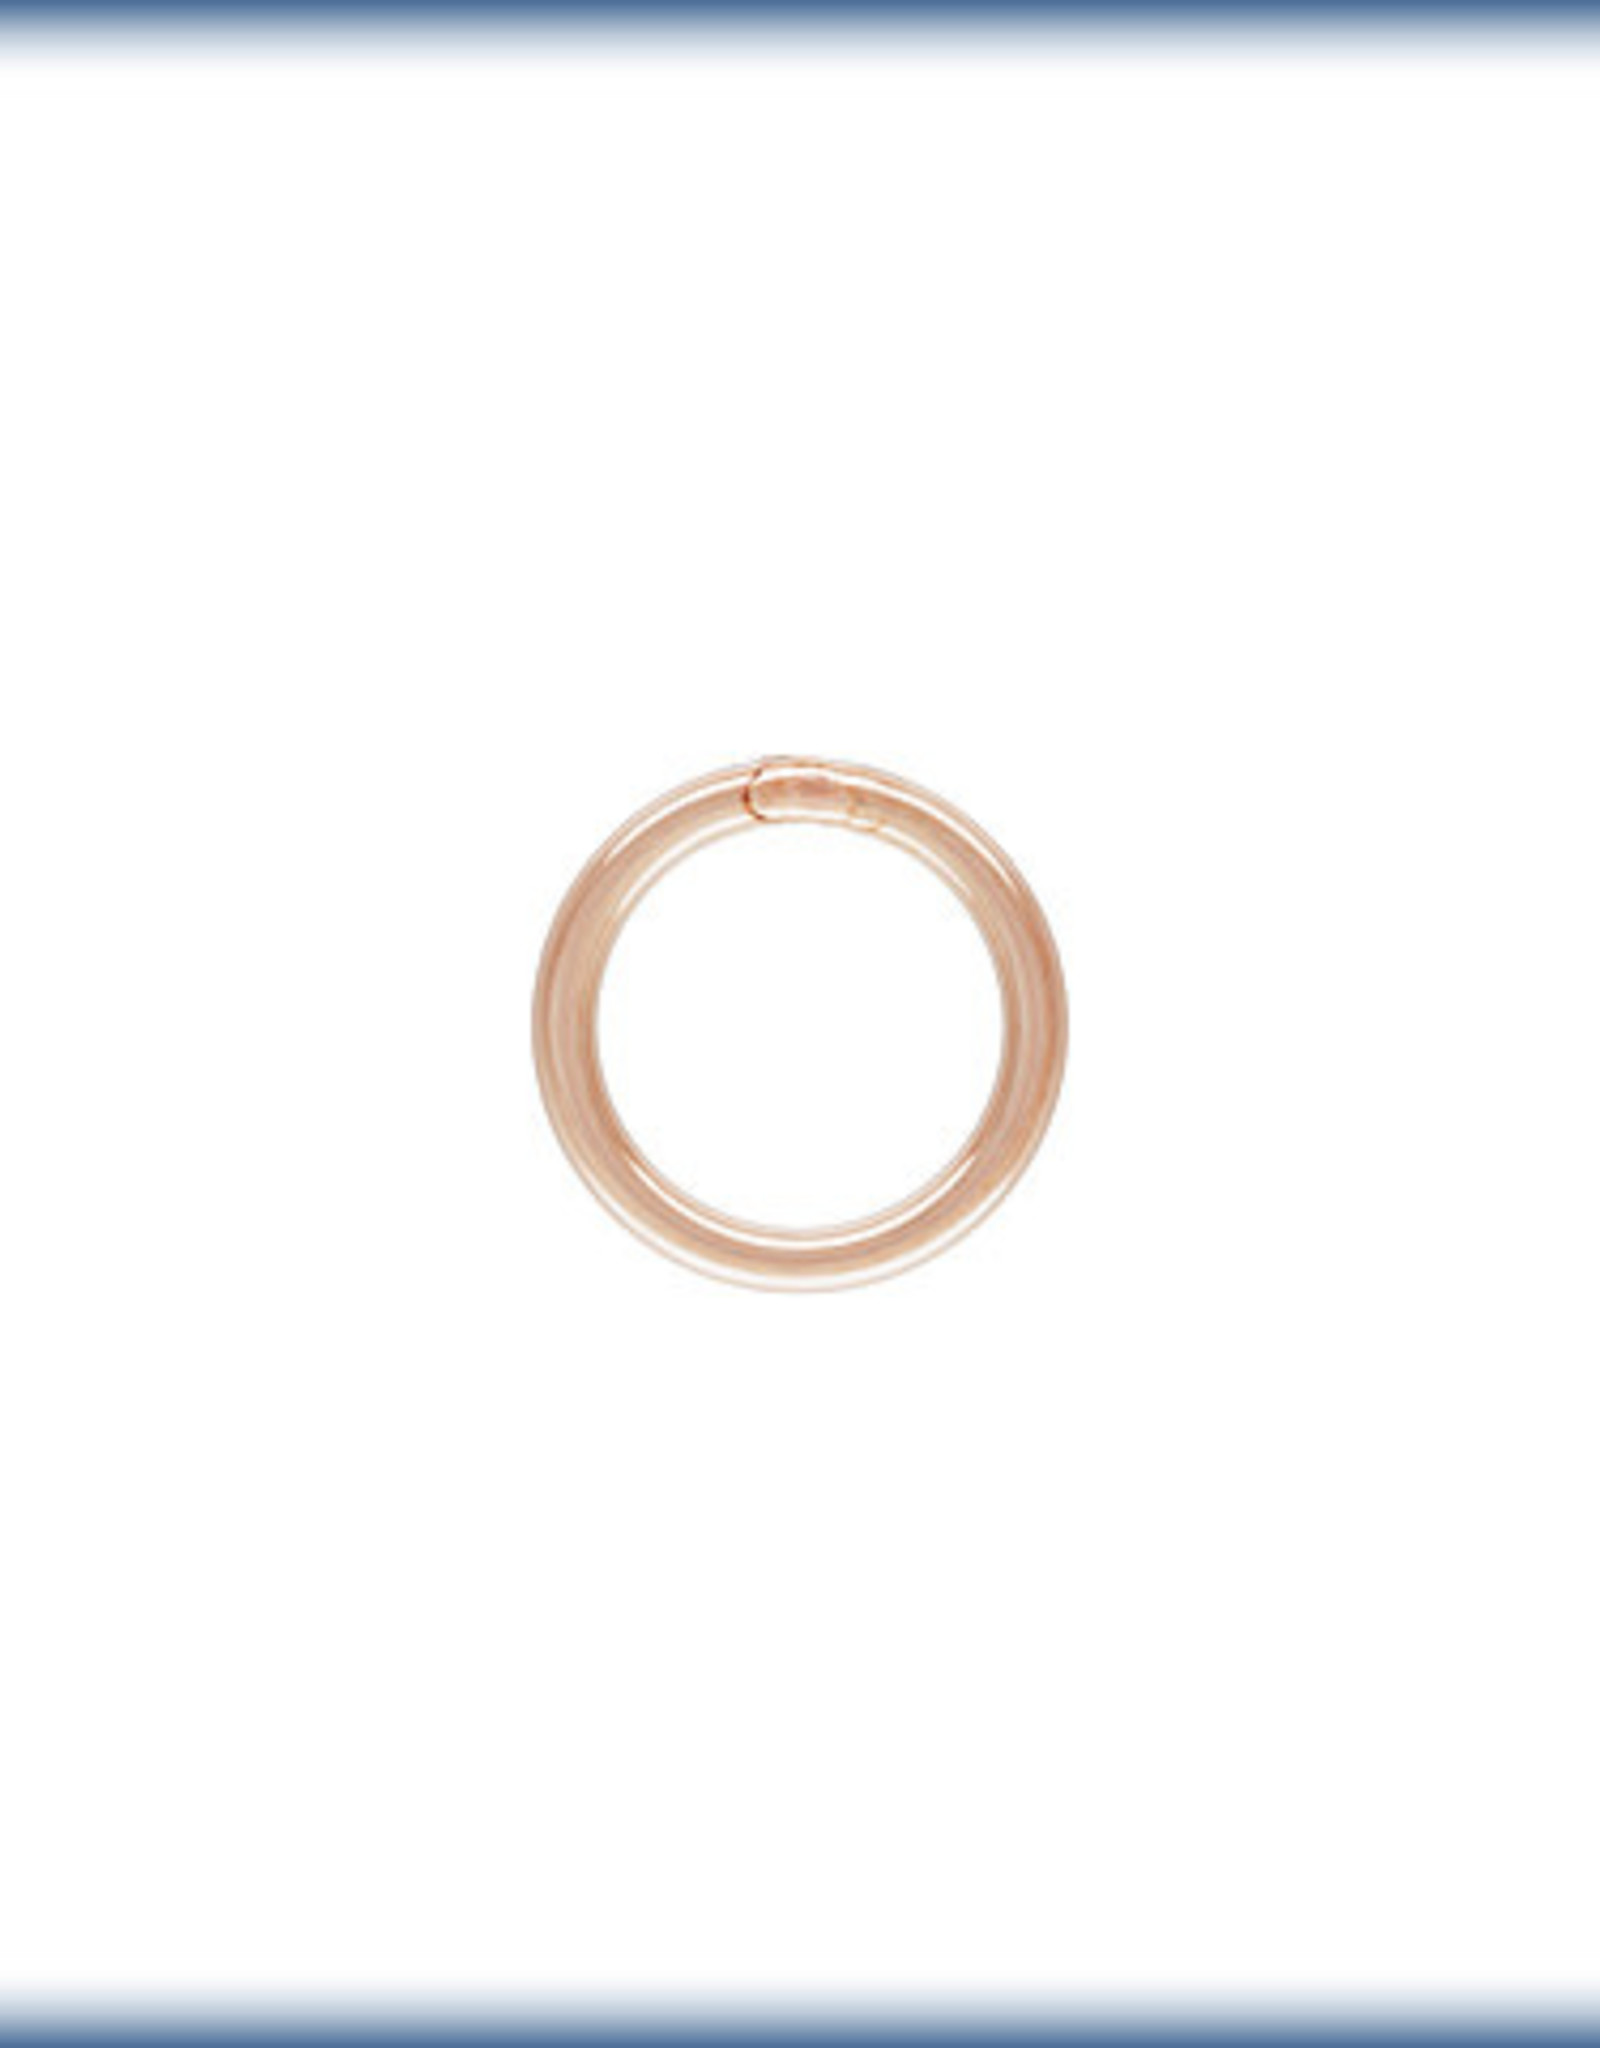 5mm Closed Ring 20ga, 14k Rose Gold Filled Qty 12